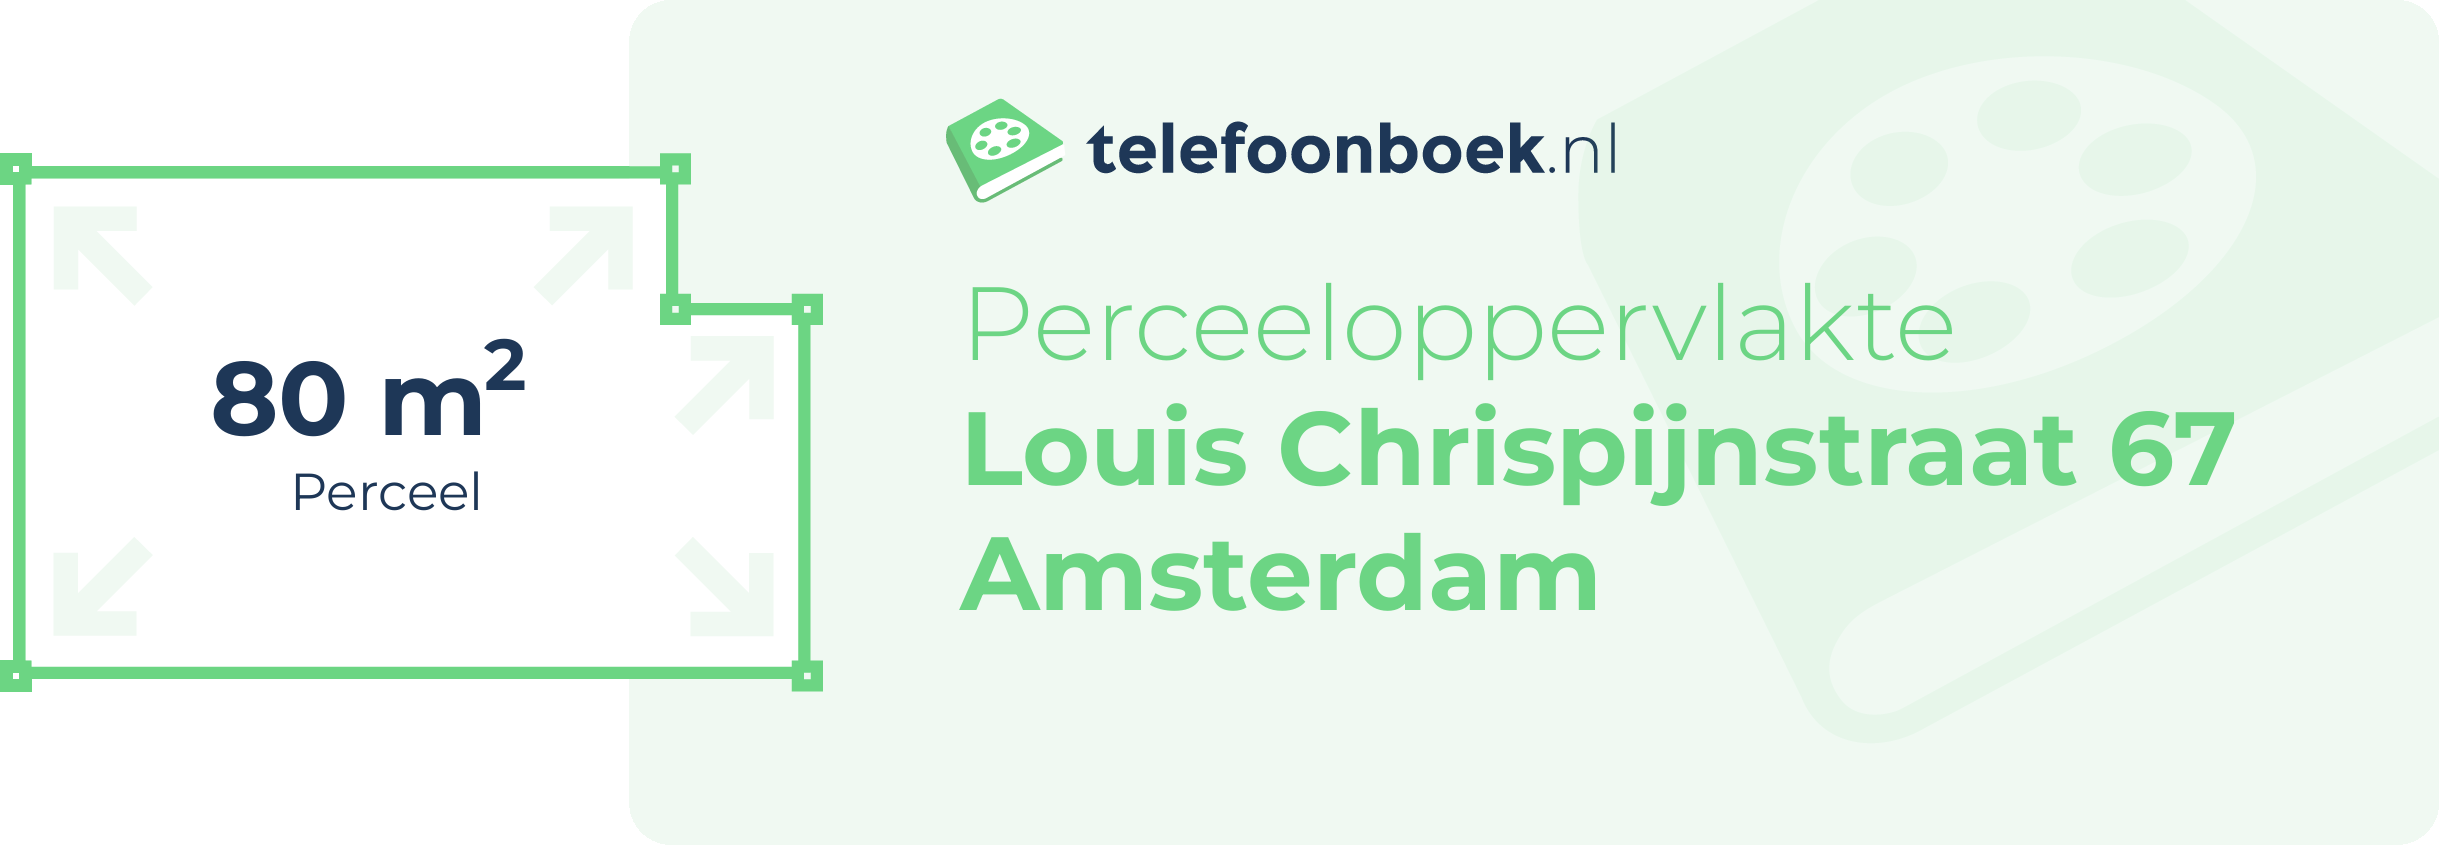 Perceeloppervlakte Louis Chrispijnstraat 67 Amsterdam